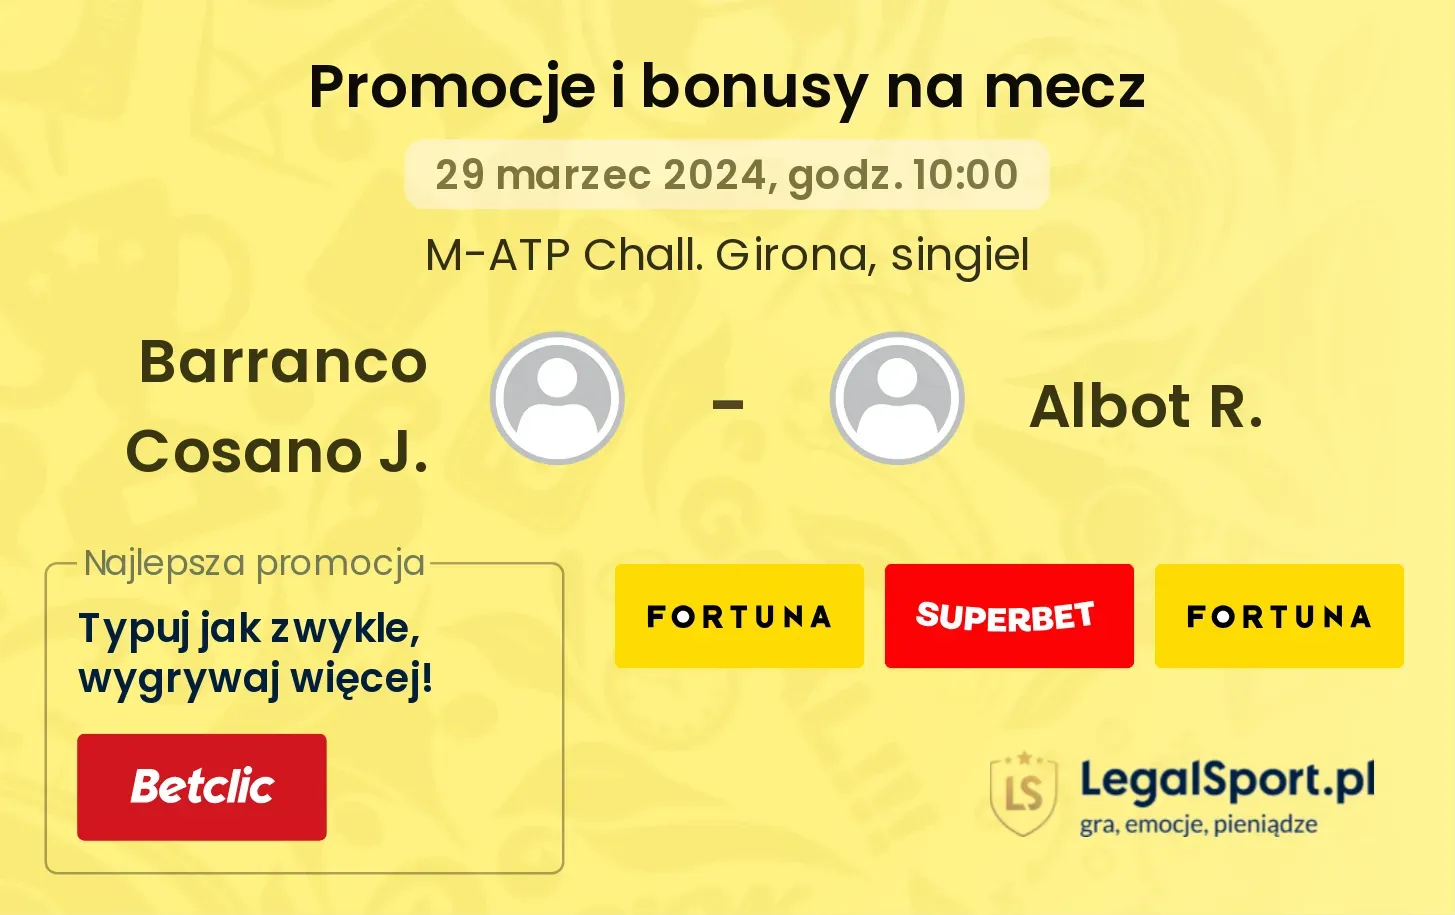 Barranco Cosano J. - Albot R. promocje bonusy na mecz